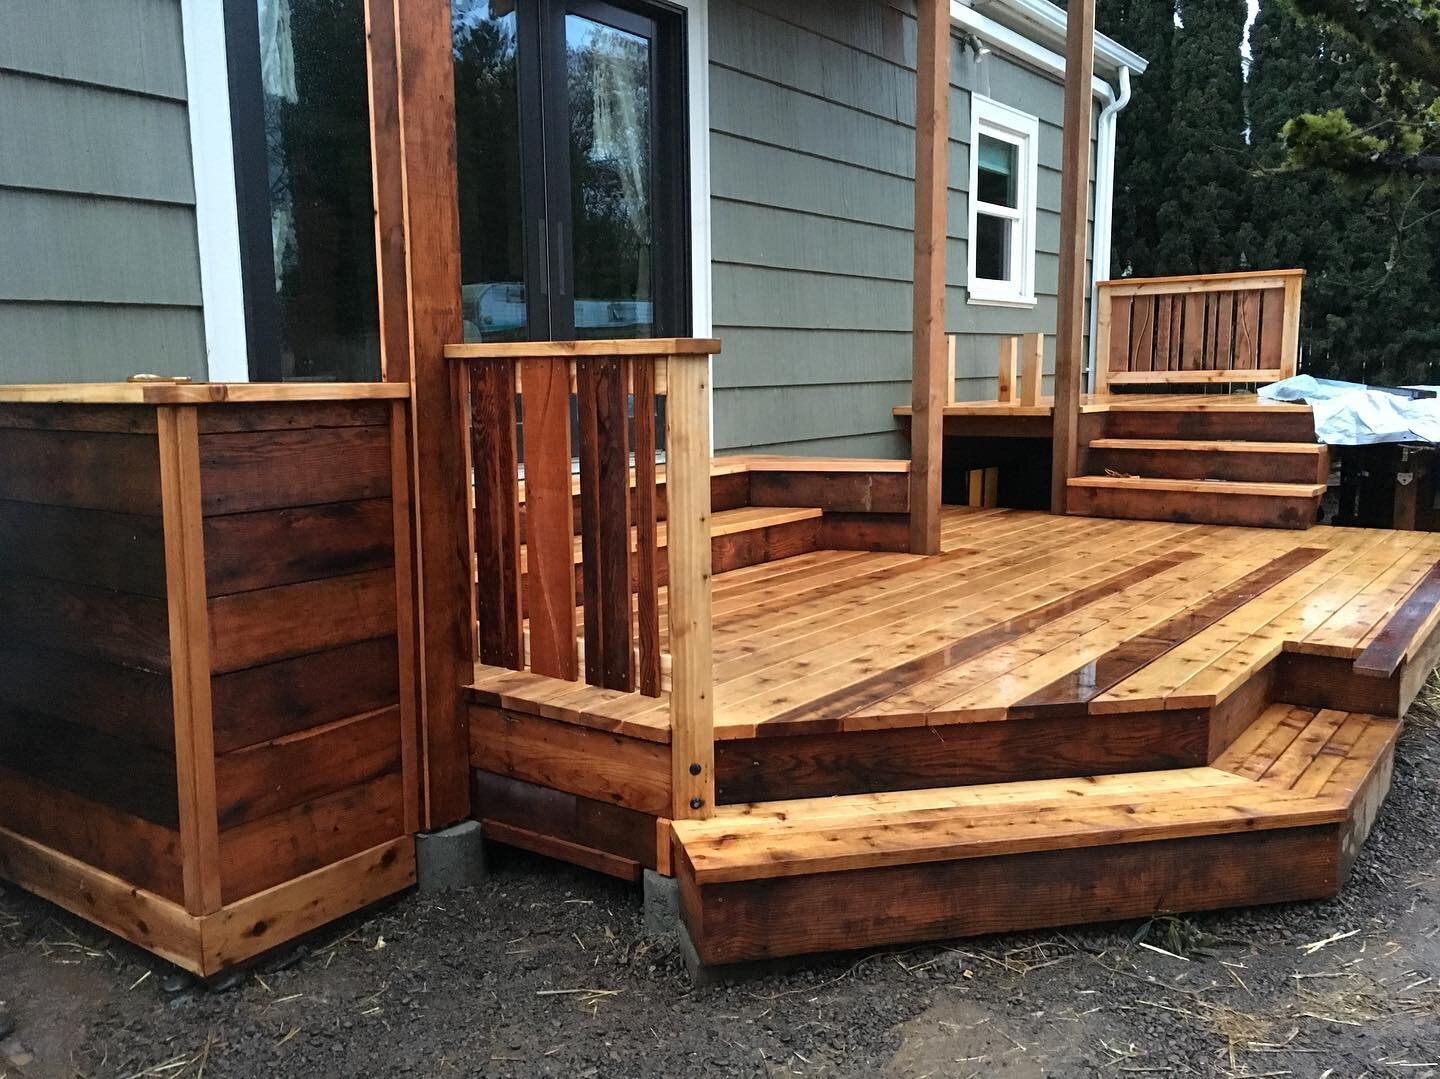 The one of a kind smell and glisten when rain hits that cedar deck for the first time ✨#decksofinstagram #placecraftdb #cedardeck #petrichor #portlandoregon #carpentry #repurposedwood